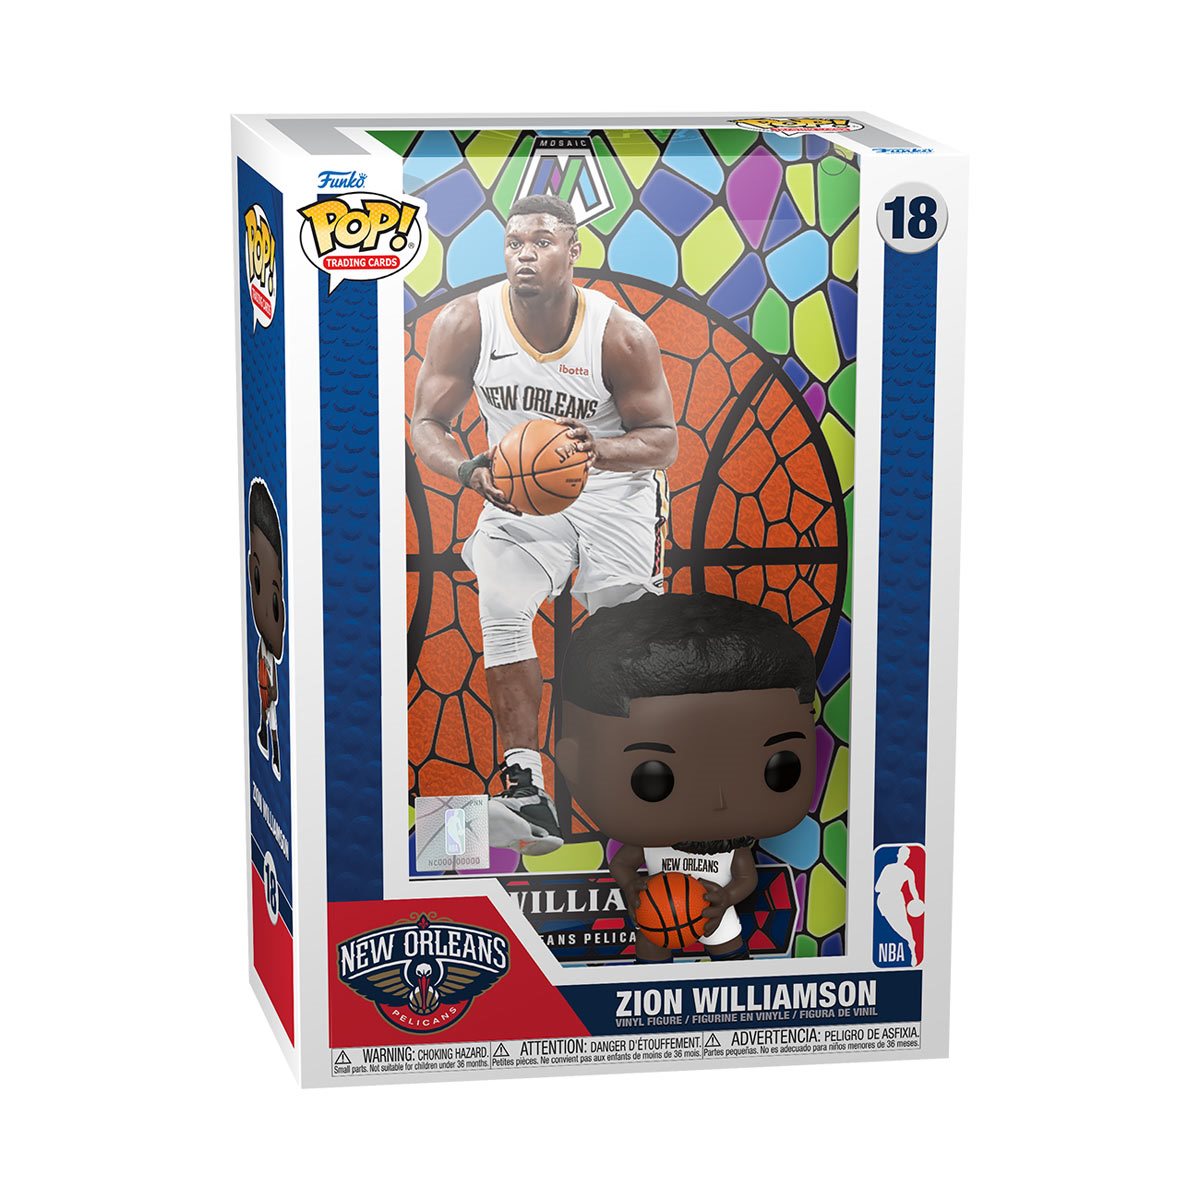 NBA: New Orleans Pelicans - Zion Williamson Mosaic Pop! Trading Card Figure (18)